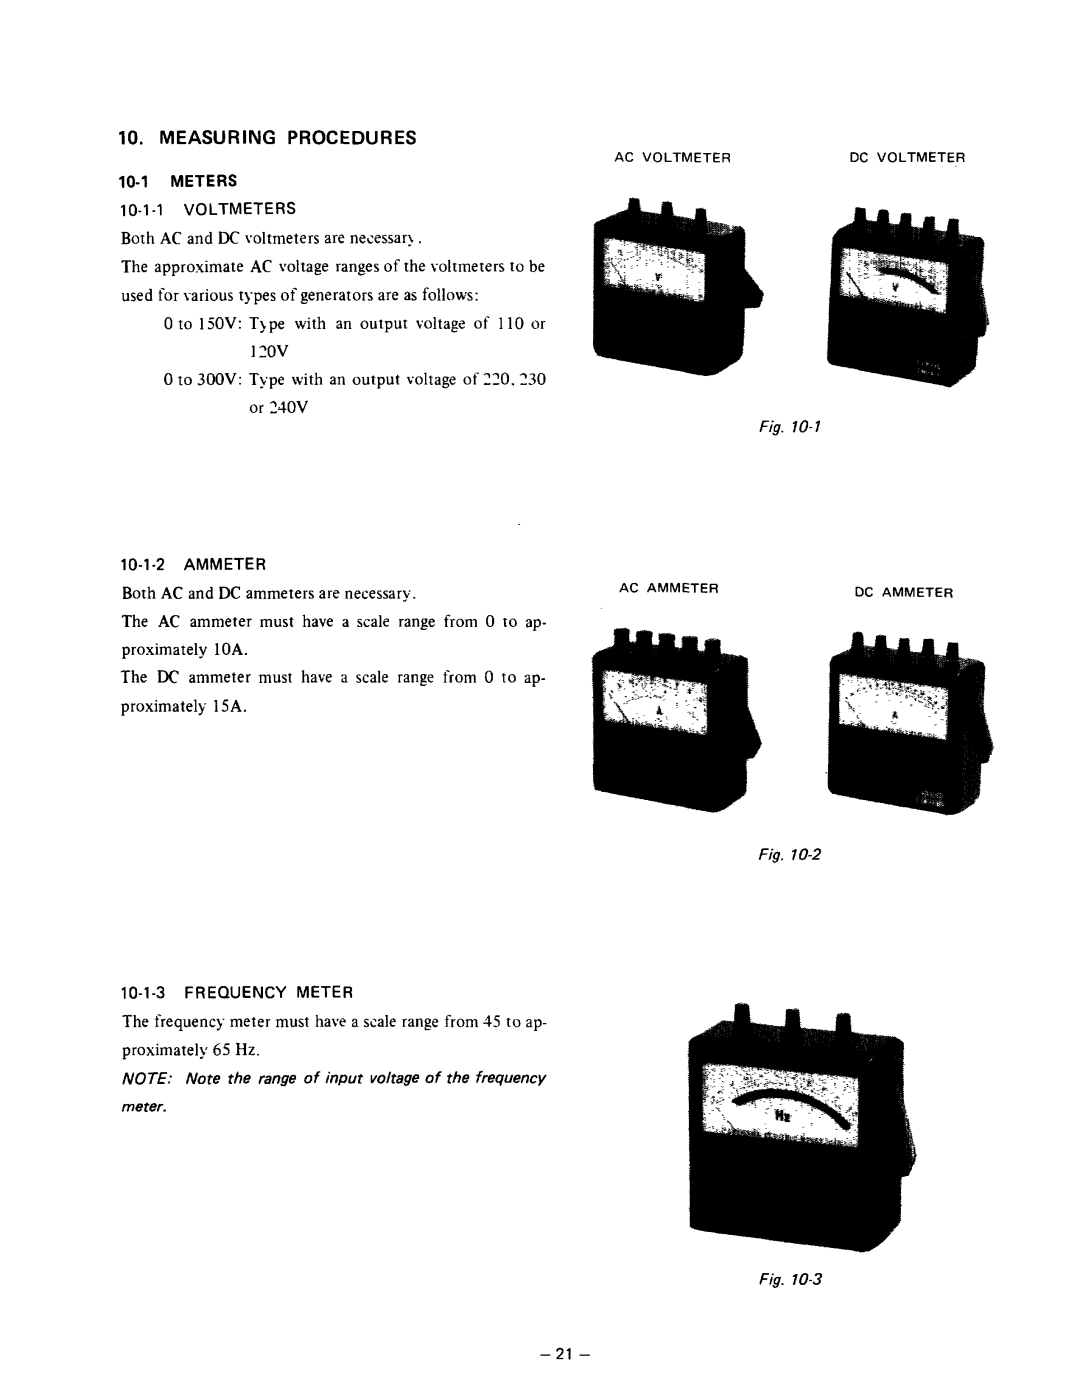 Subaru Robin Power Products R600 manual Measuring Procedures 